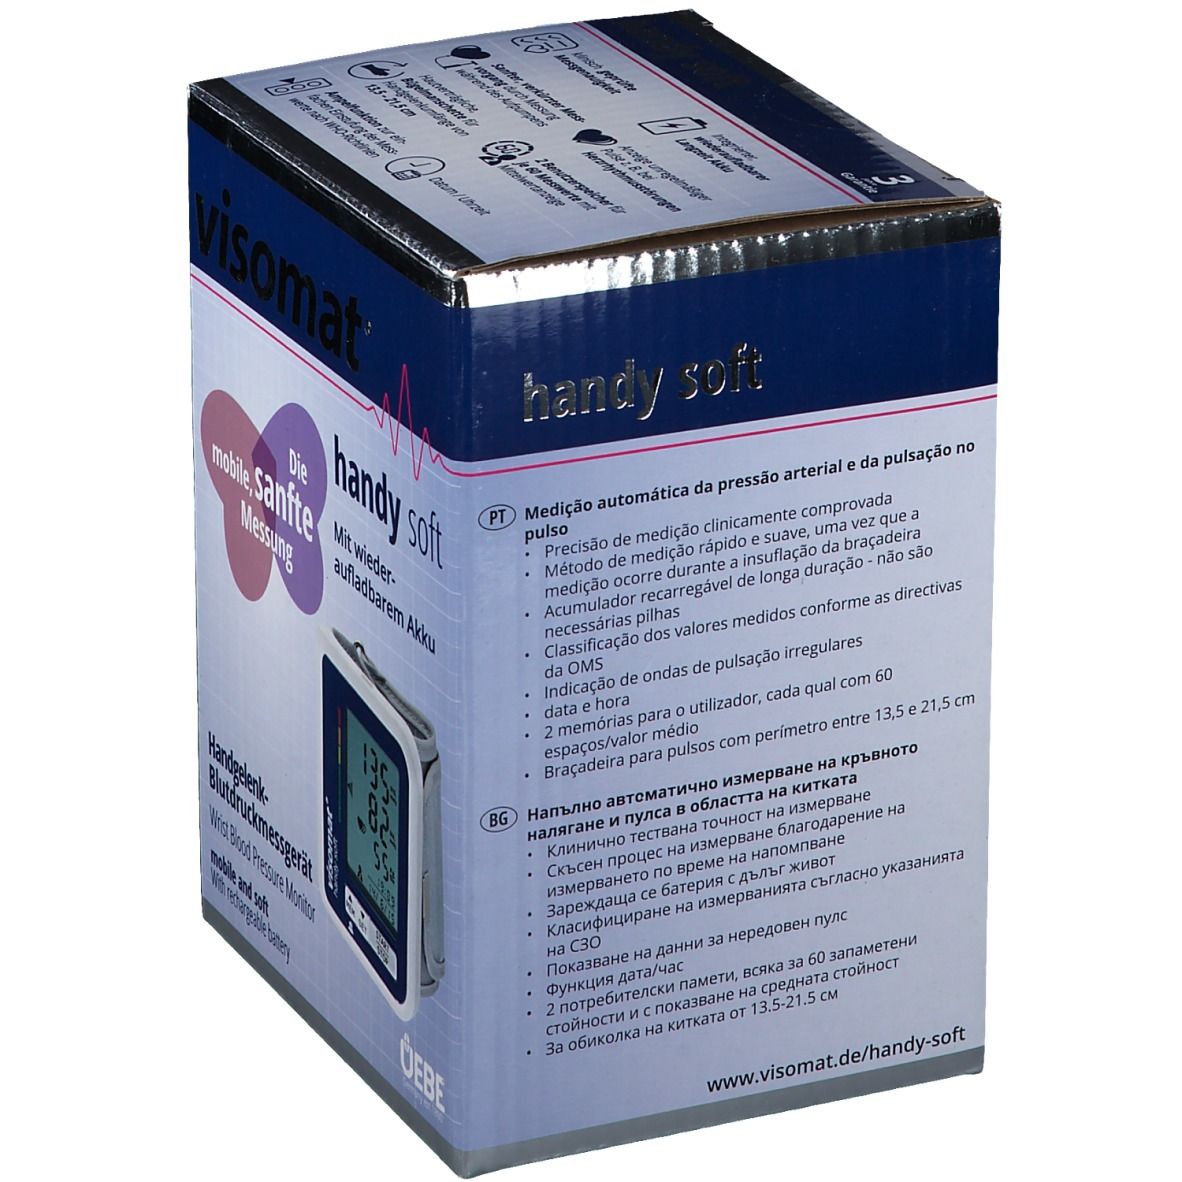 visomat® handy soft Blutdruckmessgerät